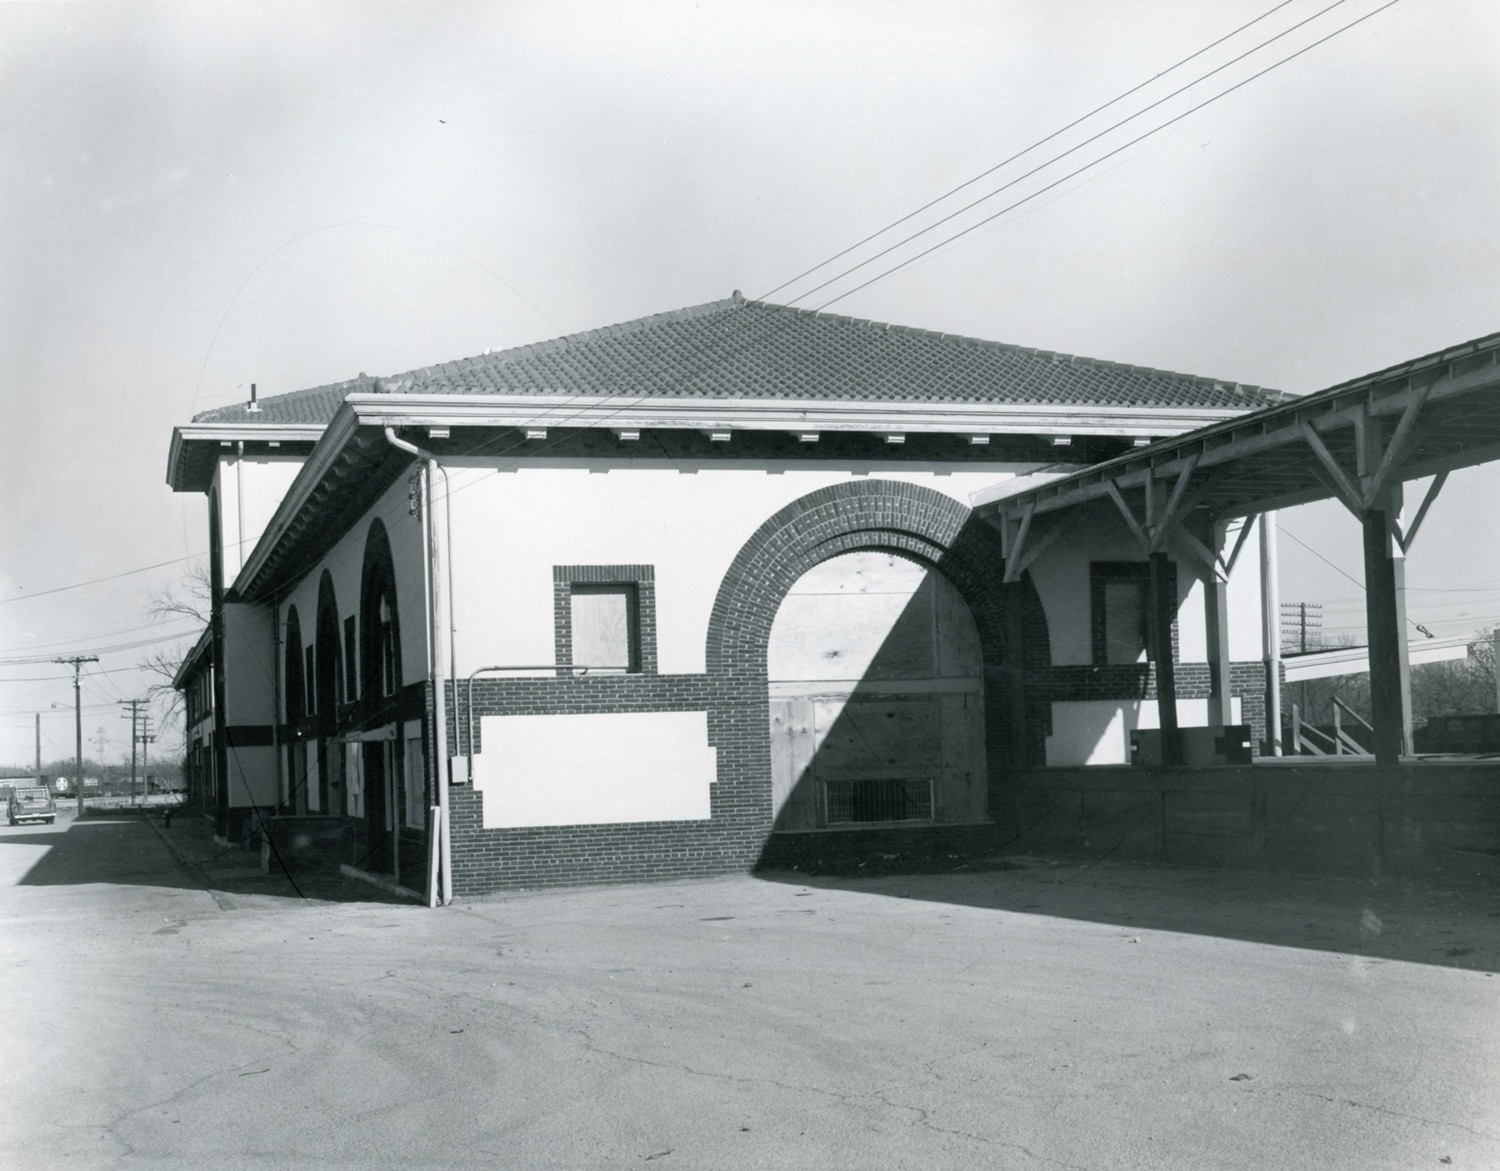 Santa Fe Railroad Station, Brownwood Texas Northwest view of passenger station from Washington Avenue (1975)